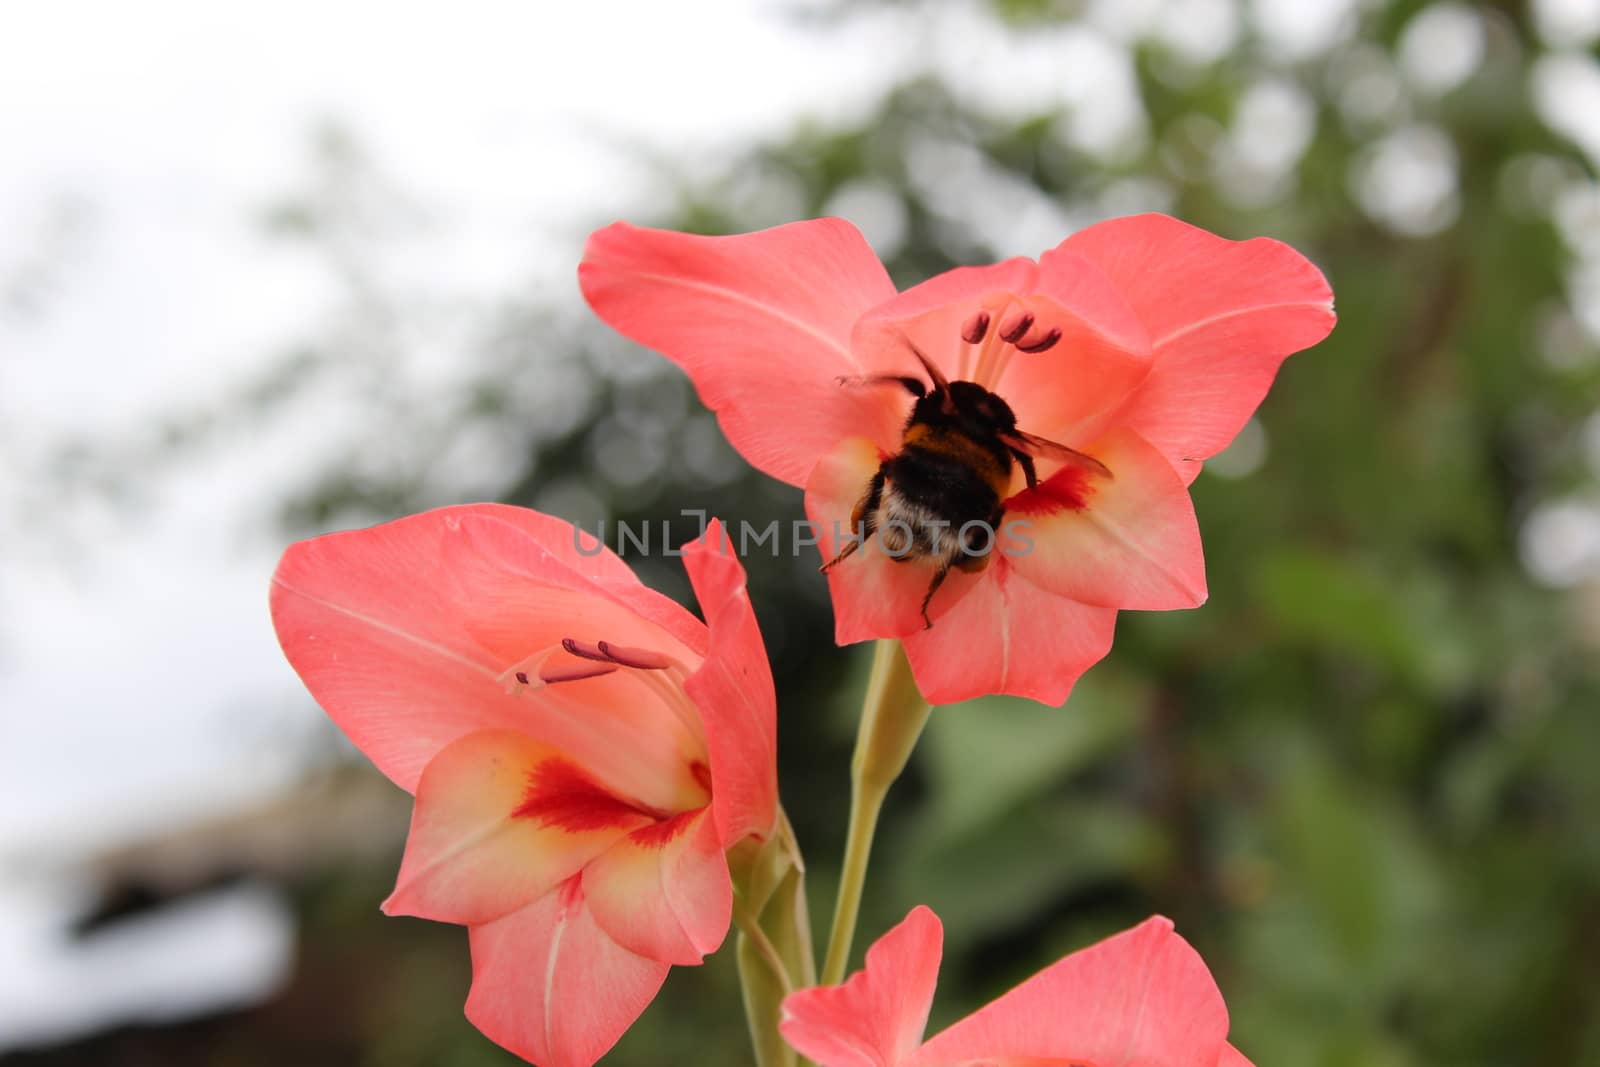 bumblebee flying near beautiful flower of pink gladiolus